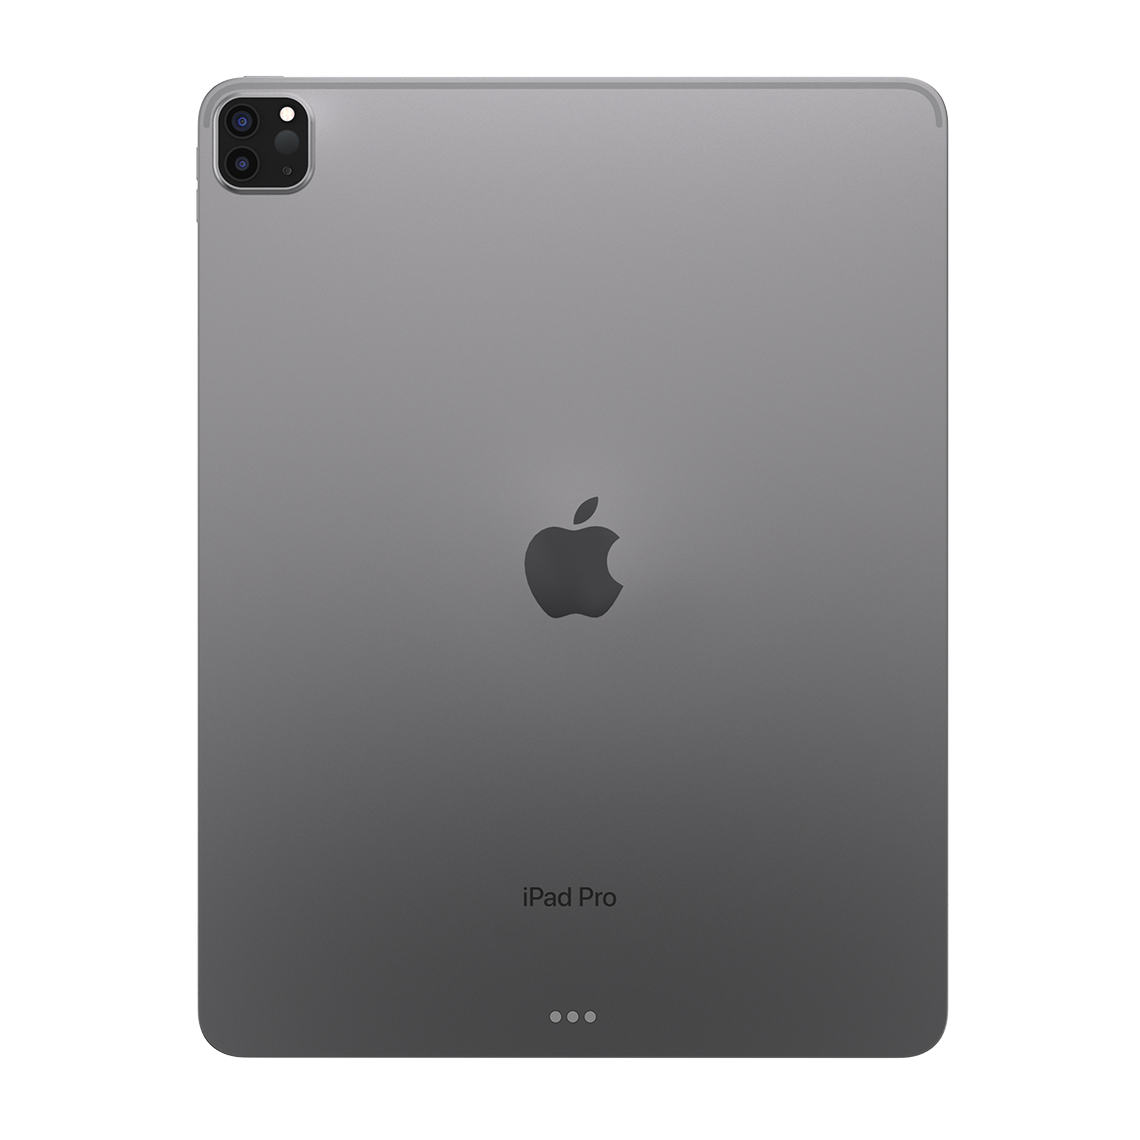 Apple iPad Pro 11-inch 3rd Generation - Space Gray - 128GB, Wi-Fi + Cellular, Open Box